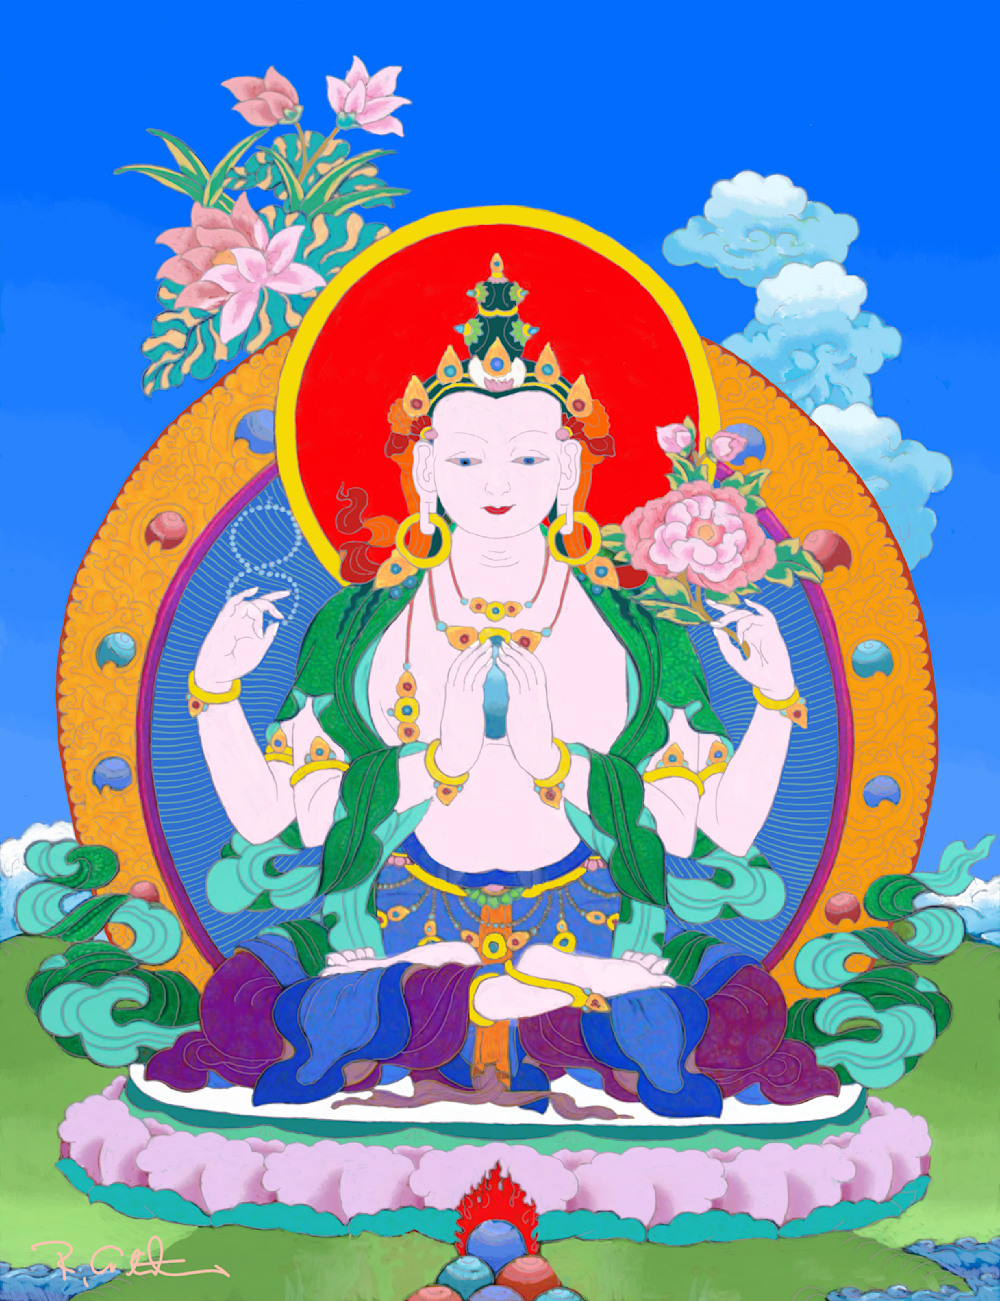 Baby Buddha Badge Reel| Inspirational Badge Reel | Faith ID Holder |  Religious Badge Reel | Buddha Lotus Badge reel